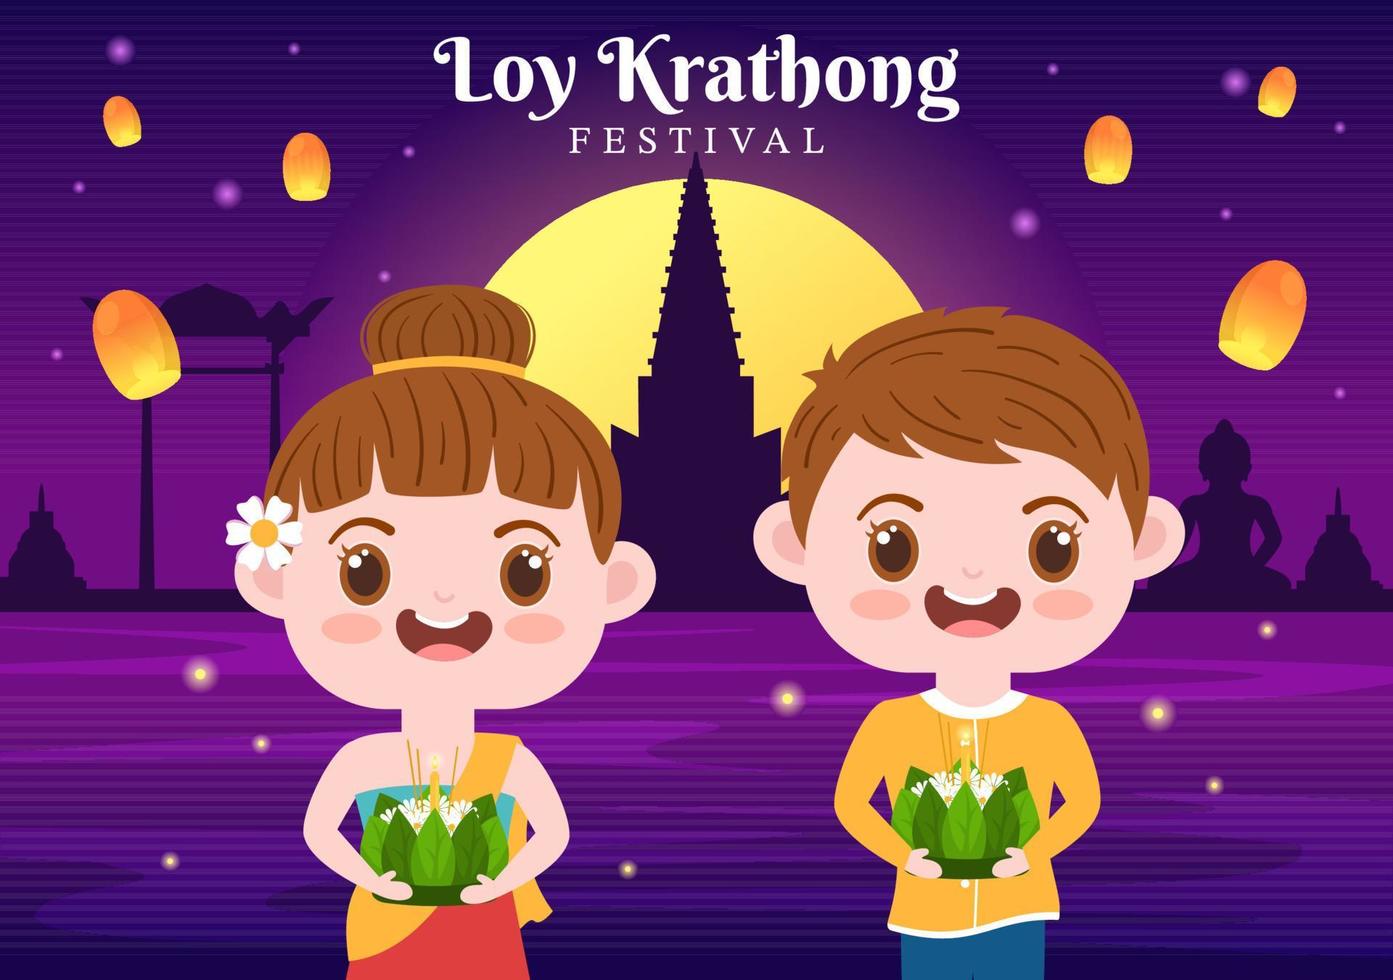 loy krathong festival viering in Thailand sjabloon hand- getrokken tekenfilm vlak illustratie met lantaarns en krathongs drijvend Aan water ontwerp vector